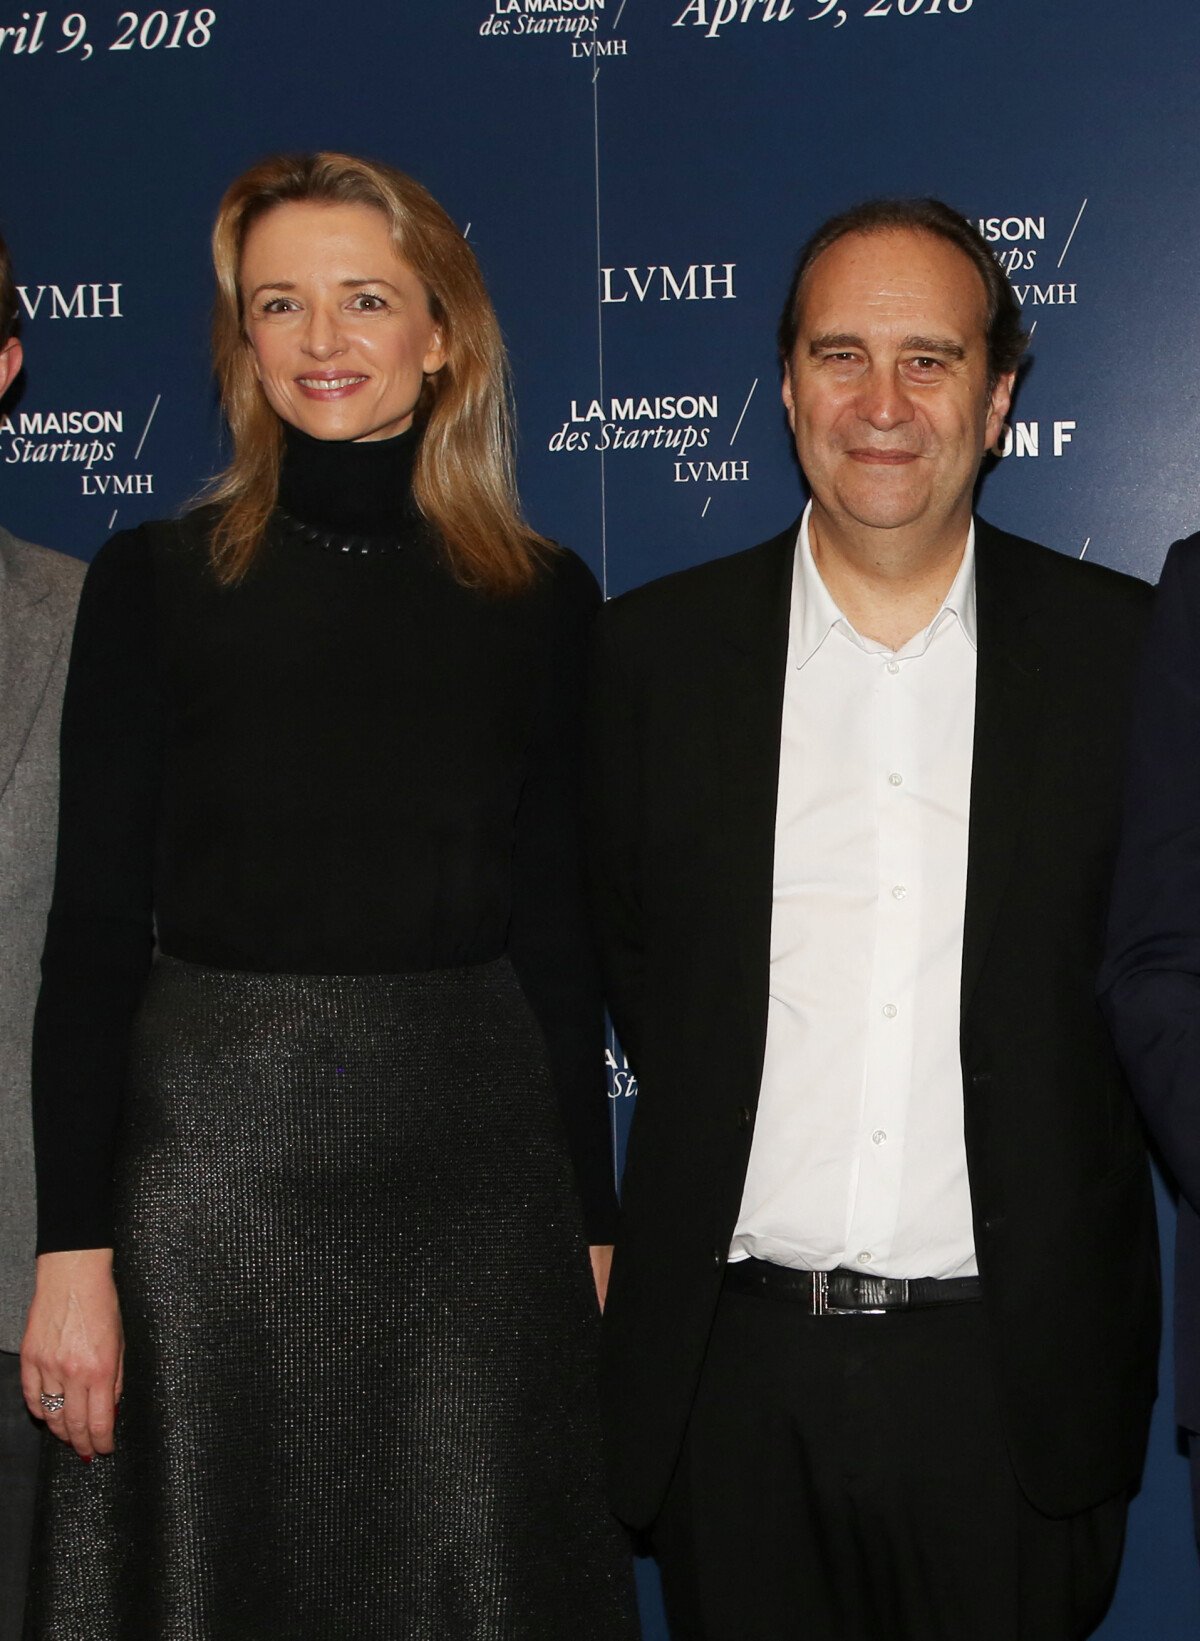 Xavier Niel et Delphine Arnault CELEBRITES : Finale Messieurs